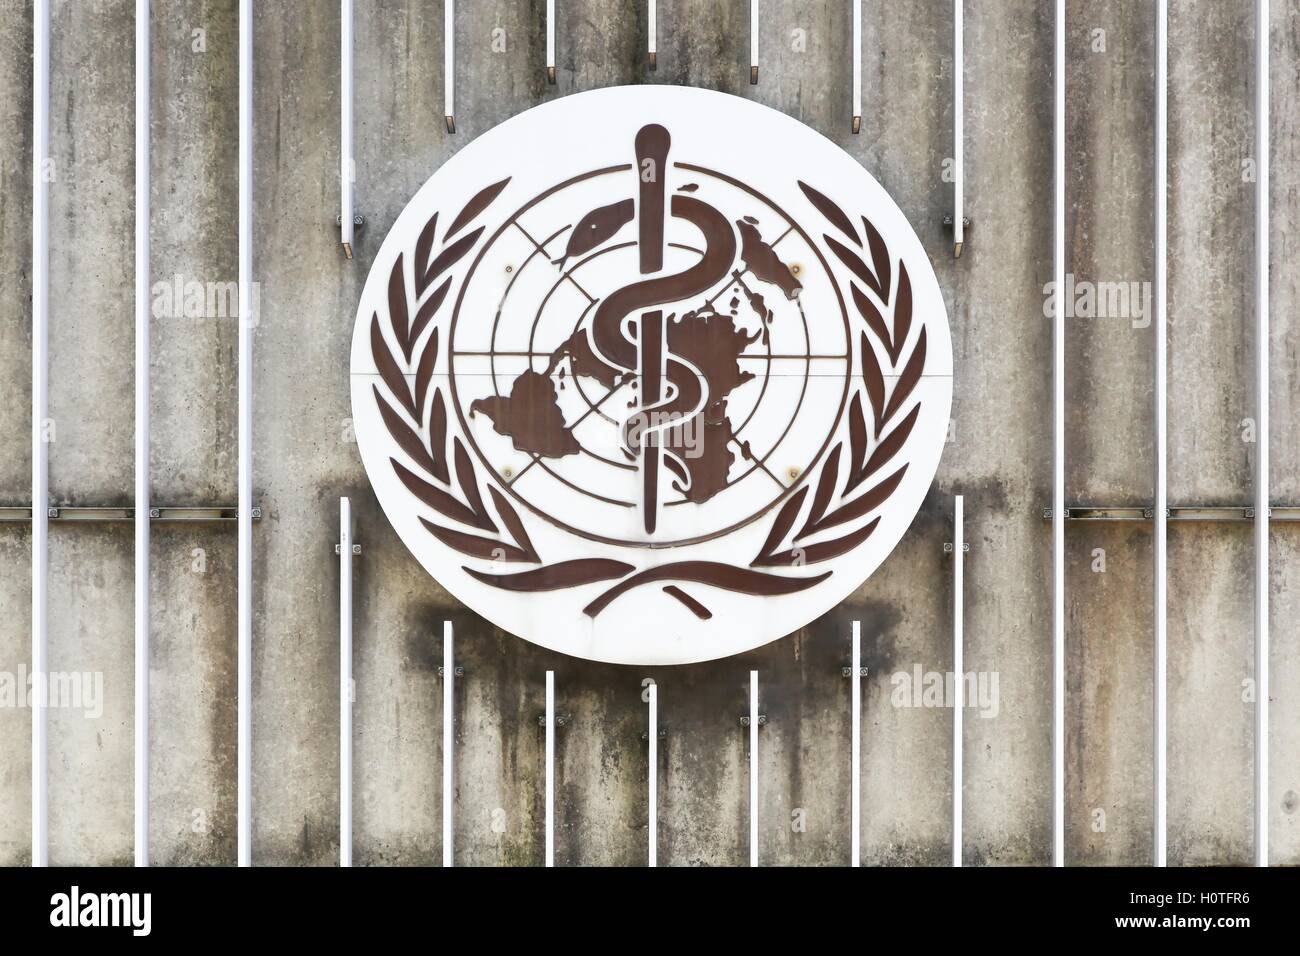 The World Health Organization logo on a wall Stock Photo